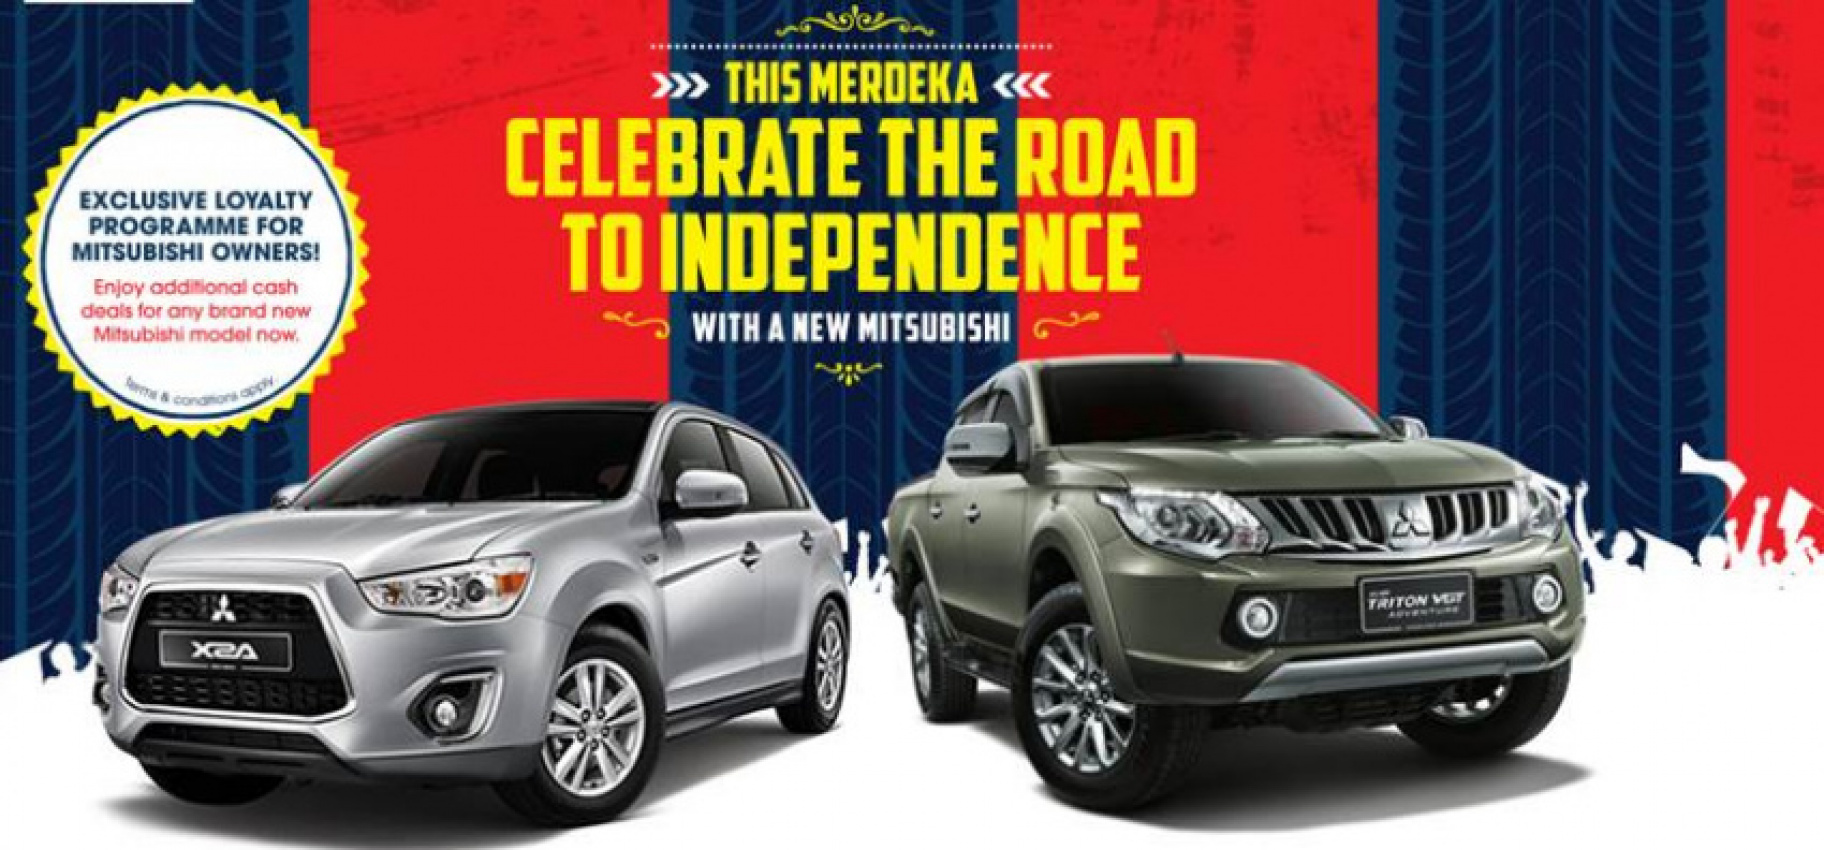 autos, cars, mitsubishi, great deals from mitsubishi for merdeka celebration